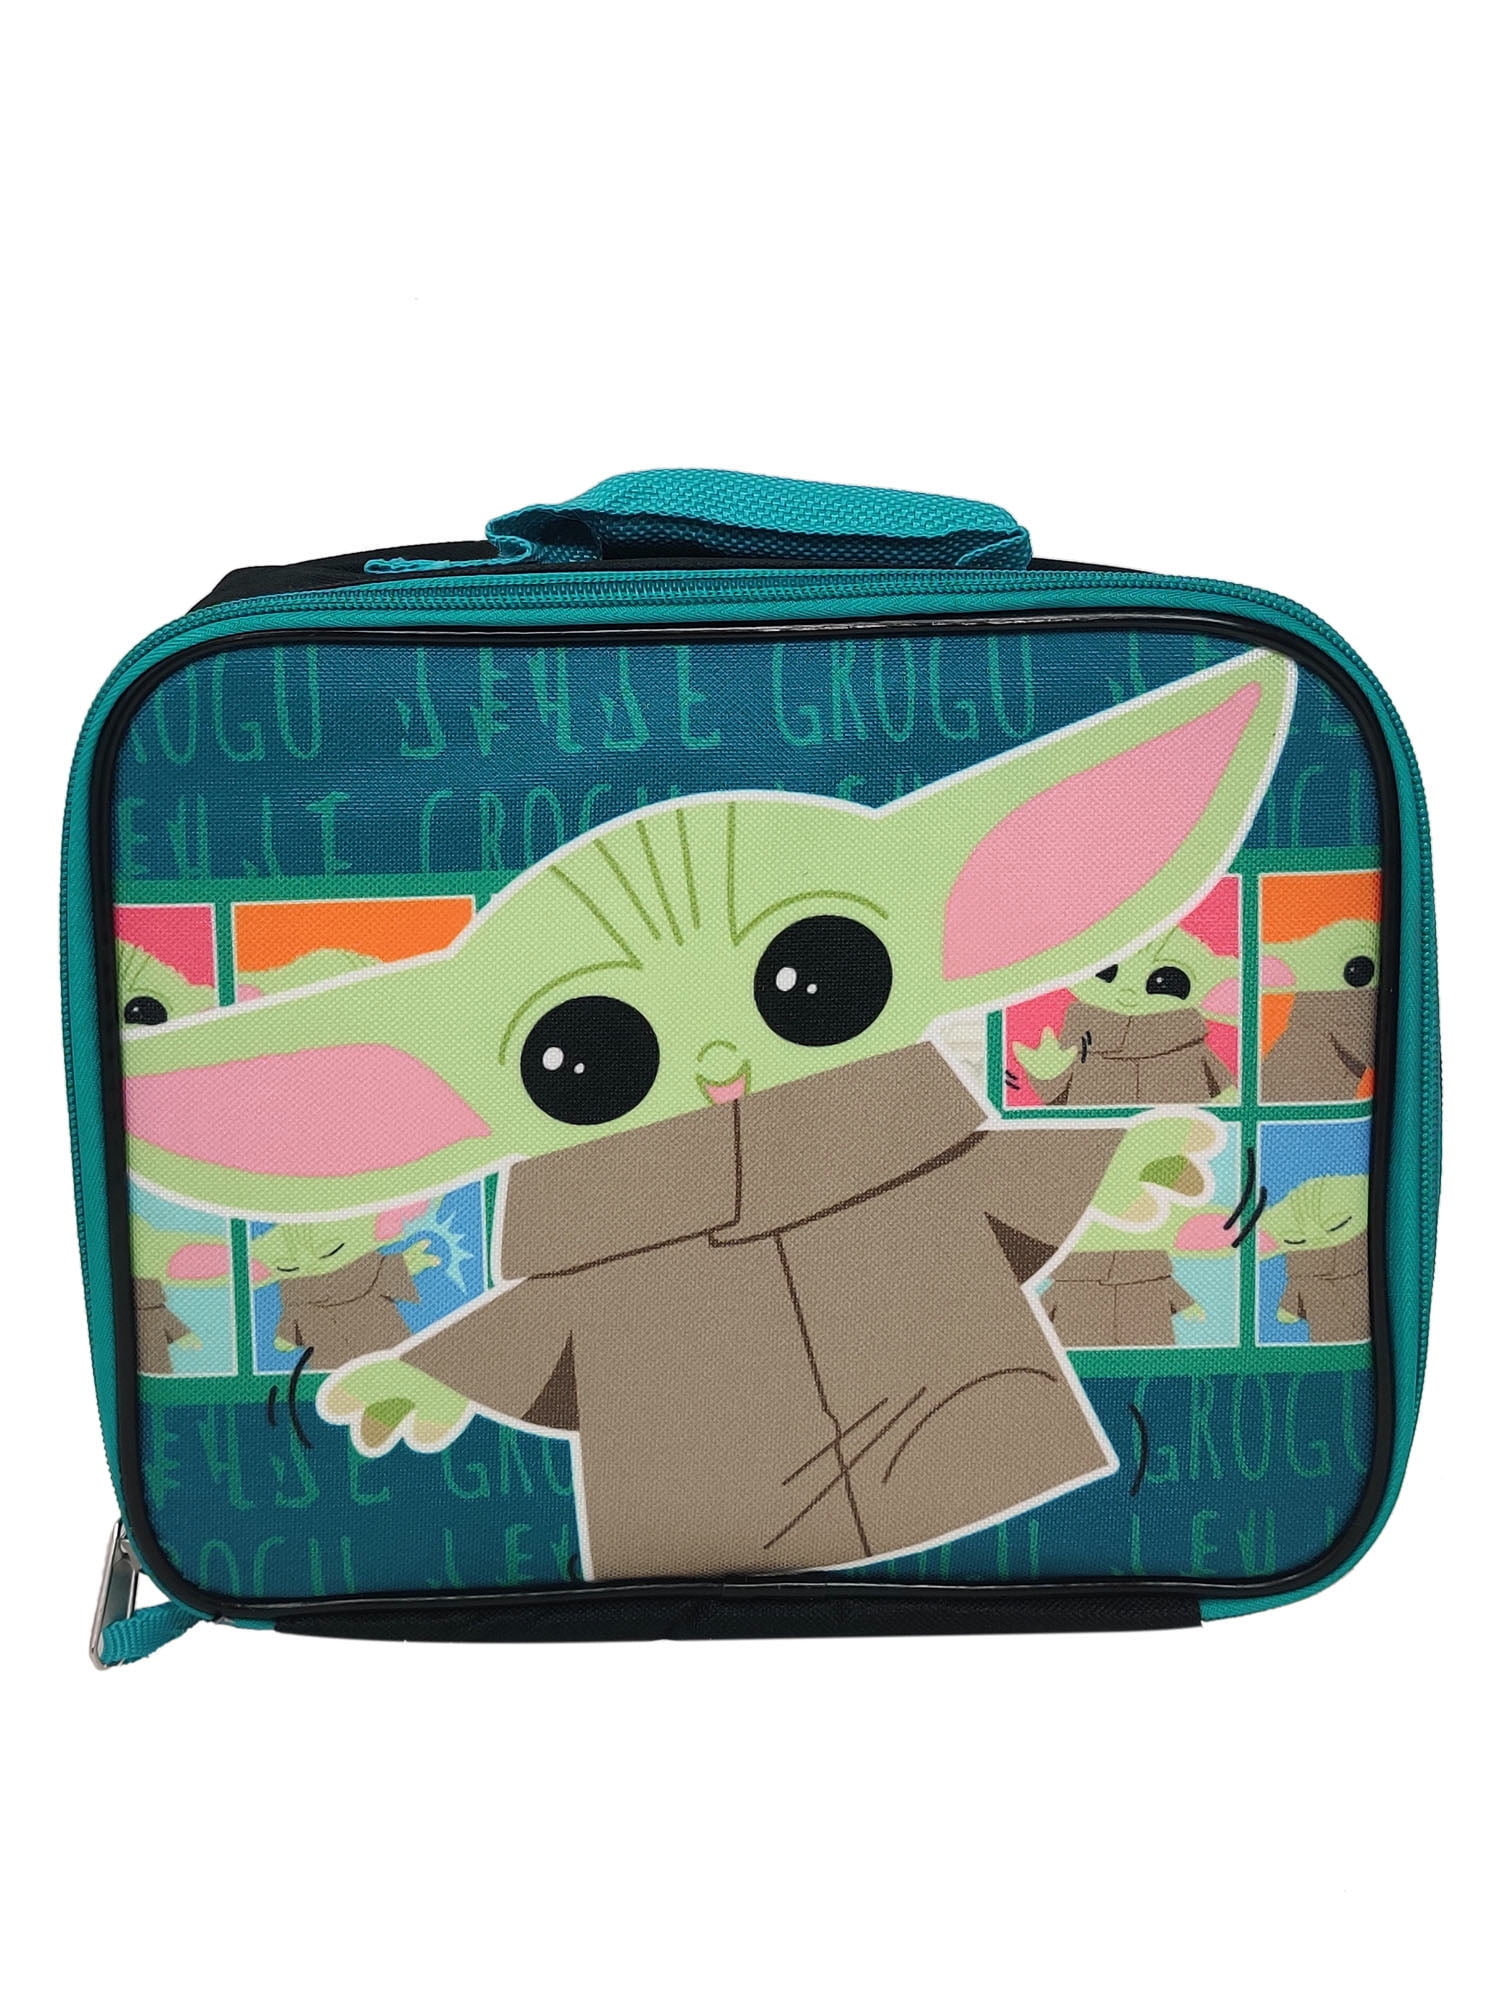 Lucas Star Wars Green Grogu Insulated Lunch Bag